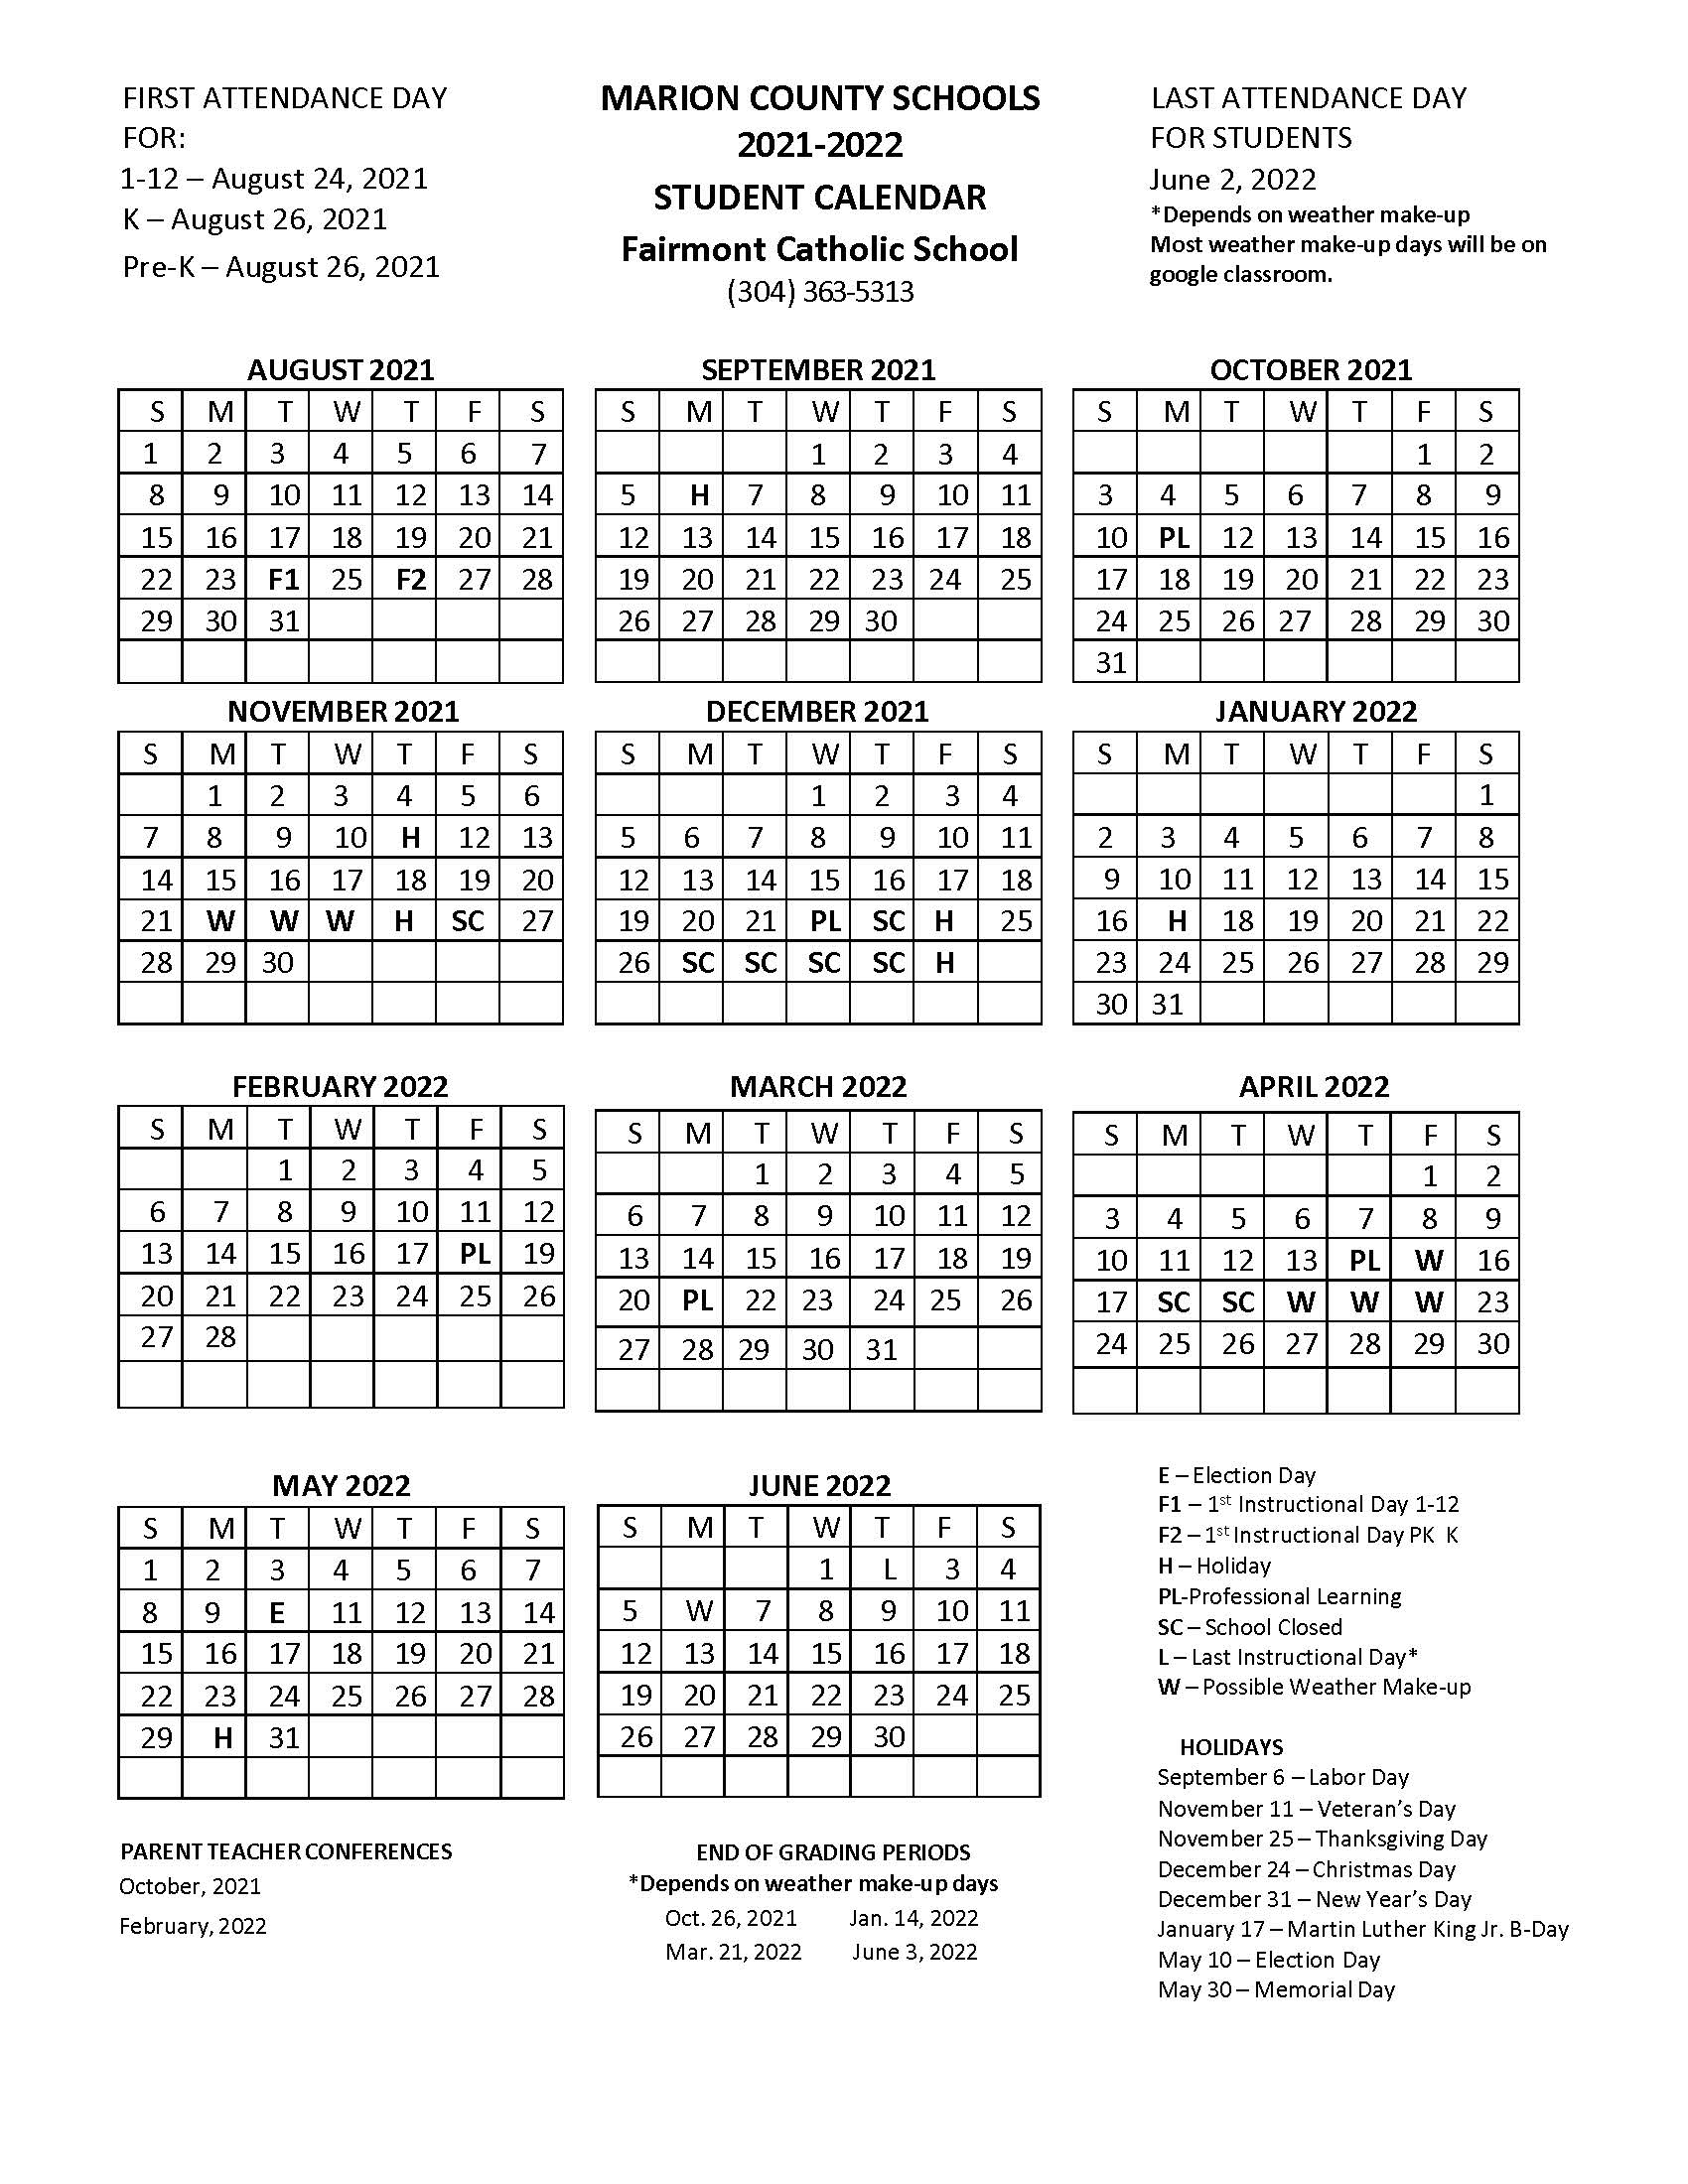 Marion Student Calendar 2021 2022 Calendar Fairmont Catholic School